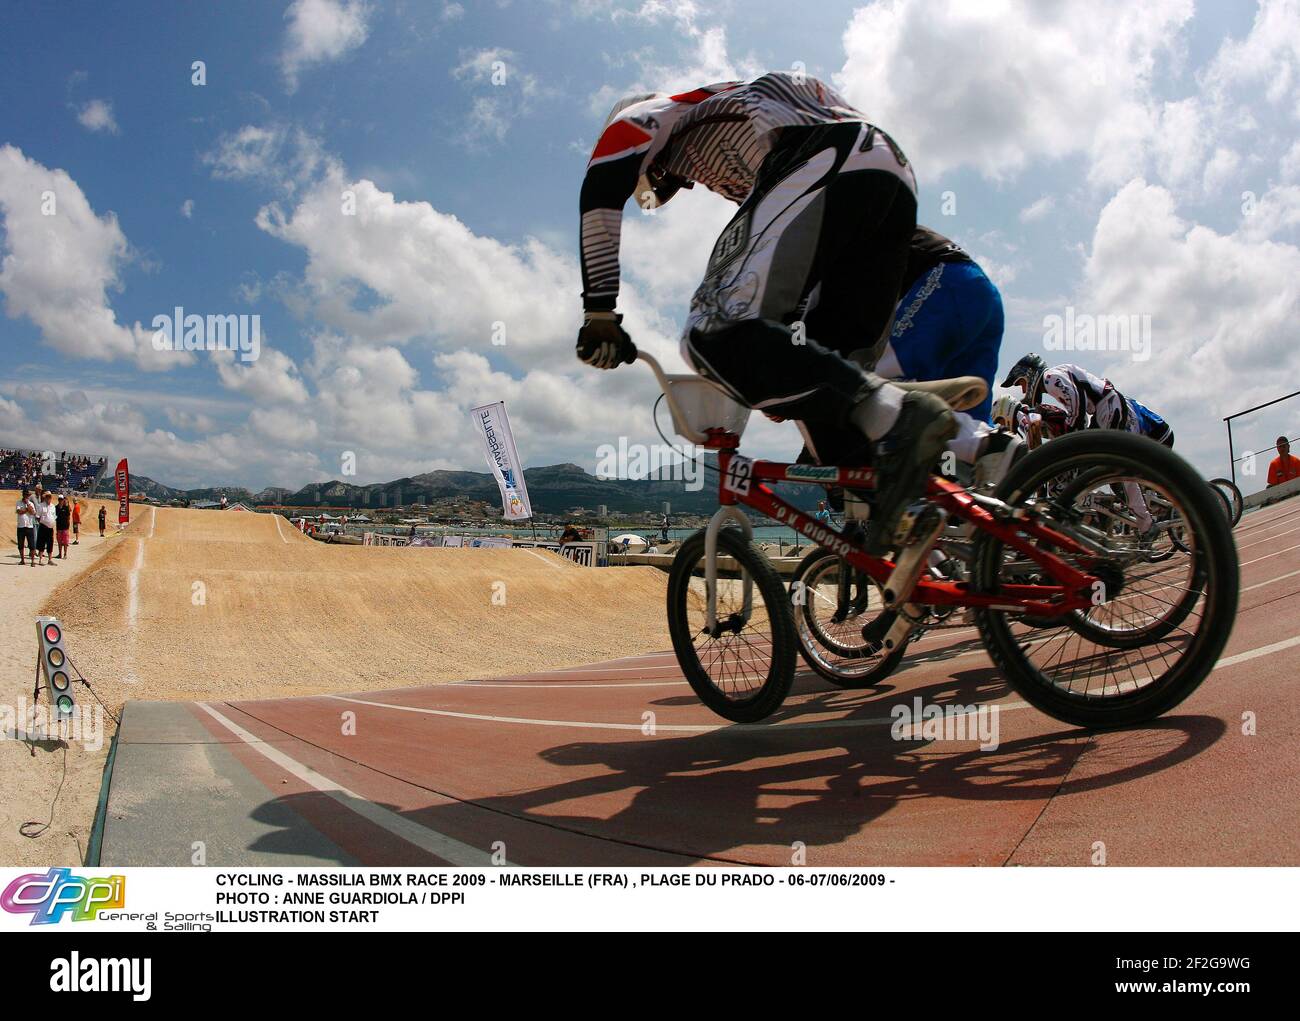 CYCLING - MASSILIA BMX RACE 2009 - MARSEILLE (FRA) , PLAGE DU PRADO - 06-07/06/2009 - PHOTO : ANNE GUARDIOLA / DPPI ILLUSTRATION START Stock Photo